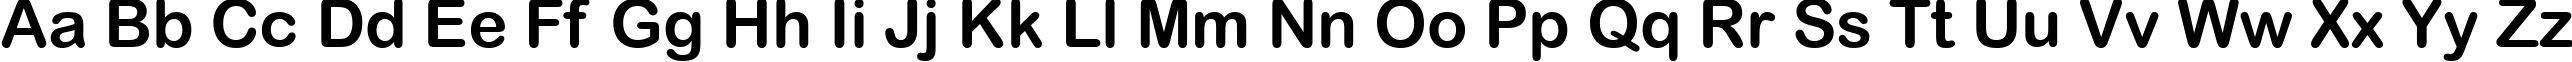 Пример написания английского алфавита шрифтом Arial Rounded MT Bold